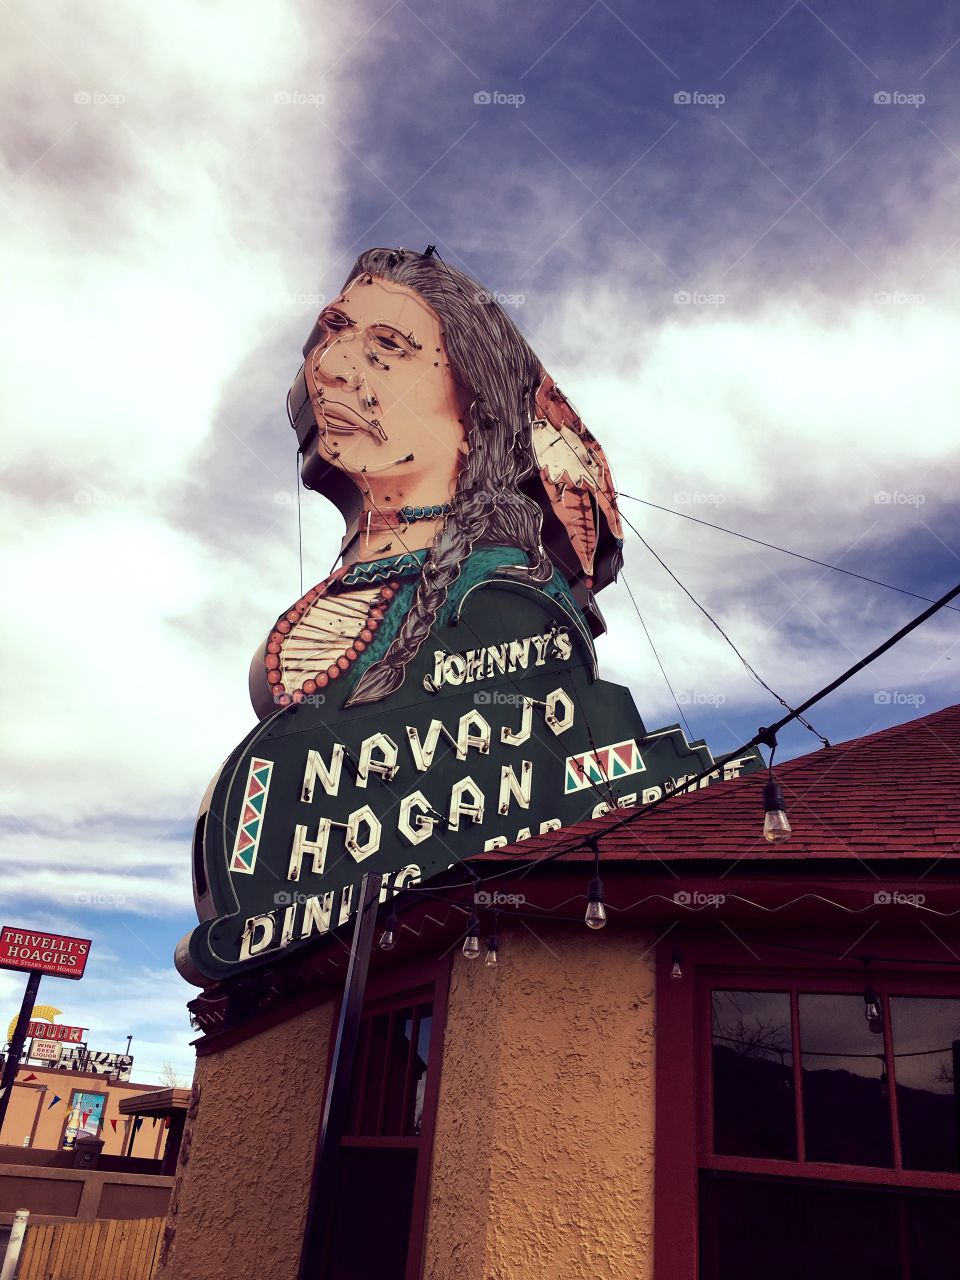 Johnny's Navajo Hogan restaurant and historic building